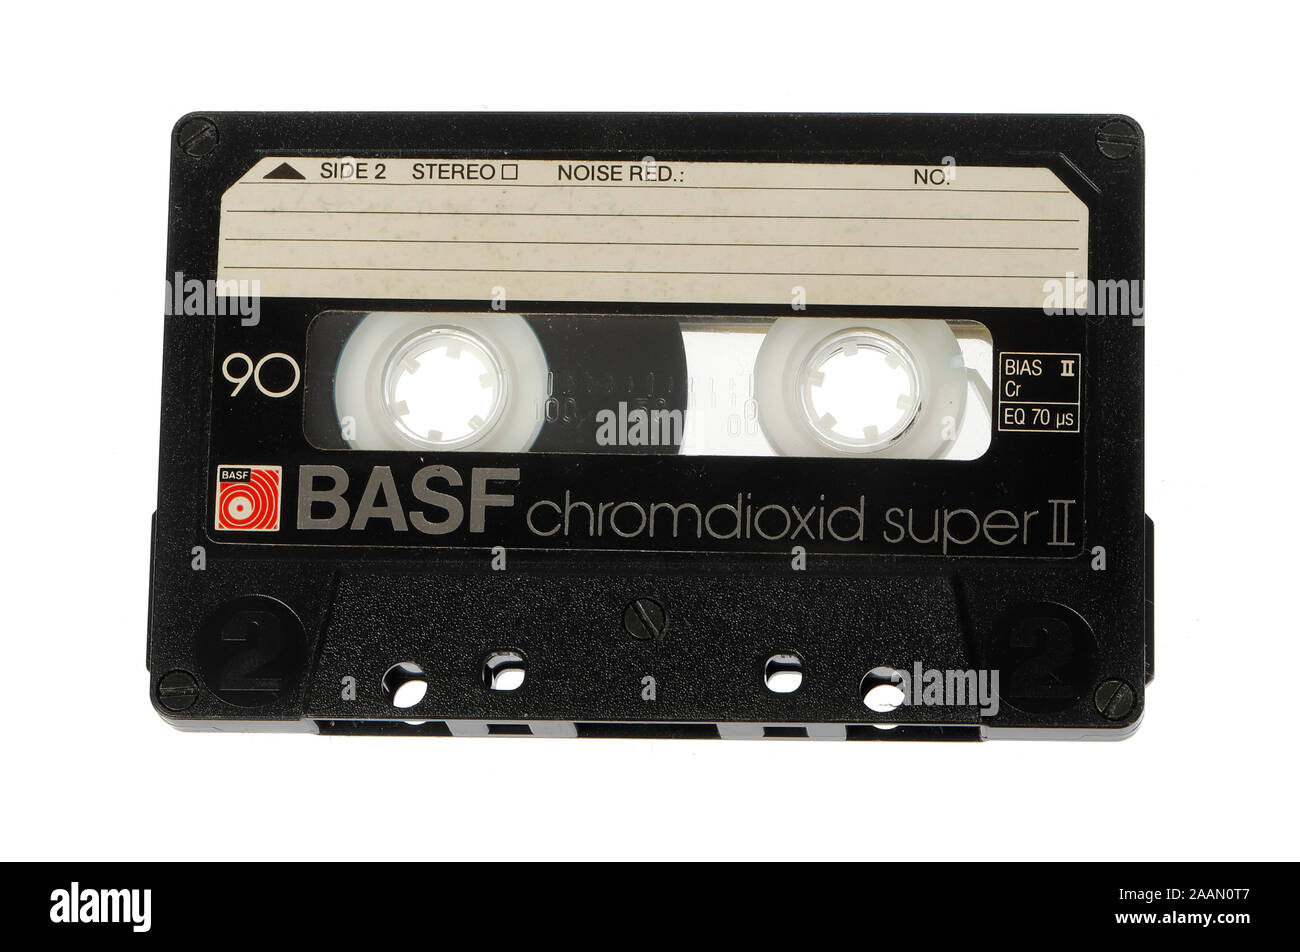 III Cinta de Cassette en Blanco III TYPE III Nuevo 90 VS BASF PROFESSIONAL 